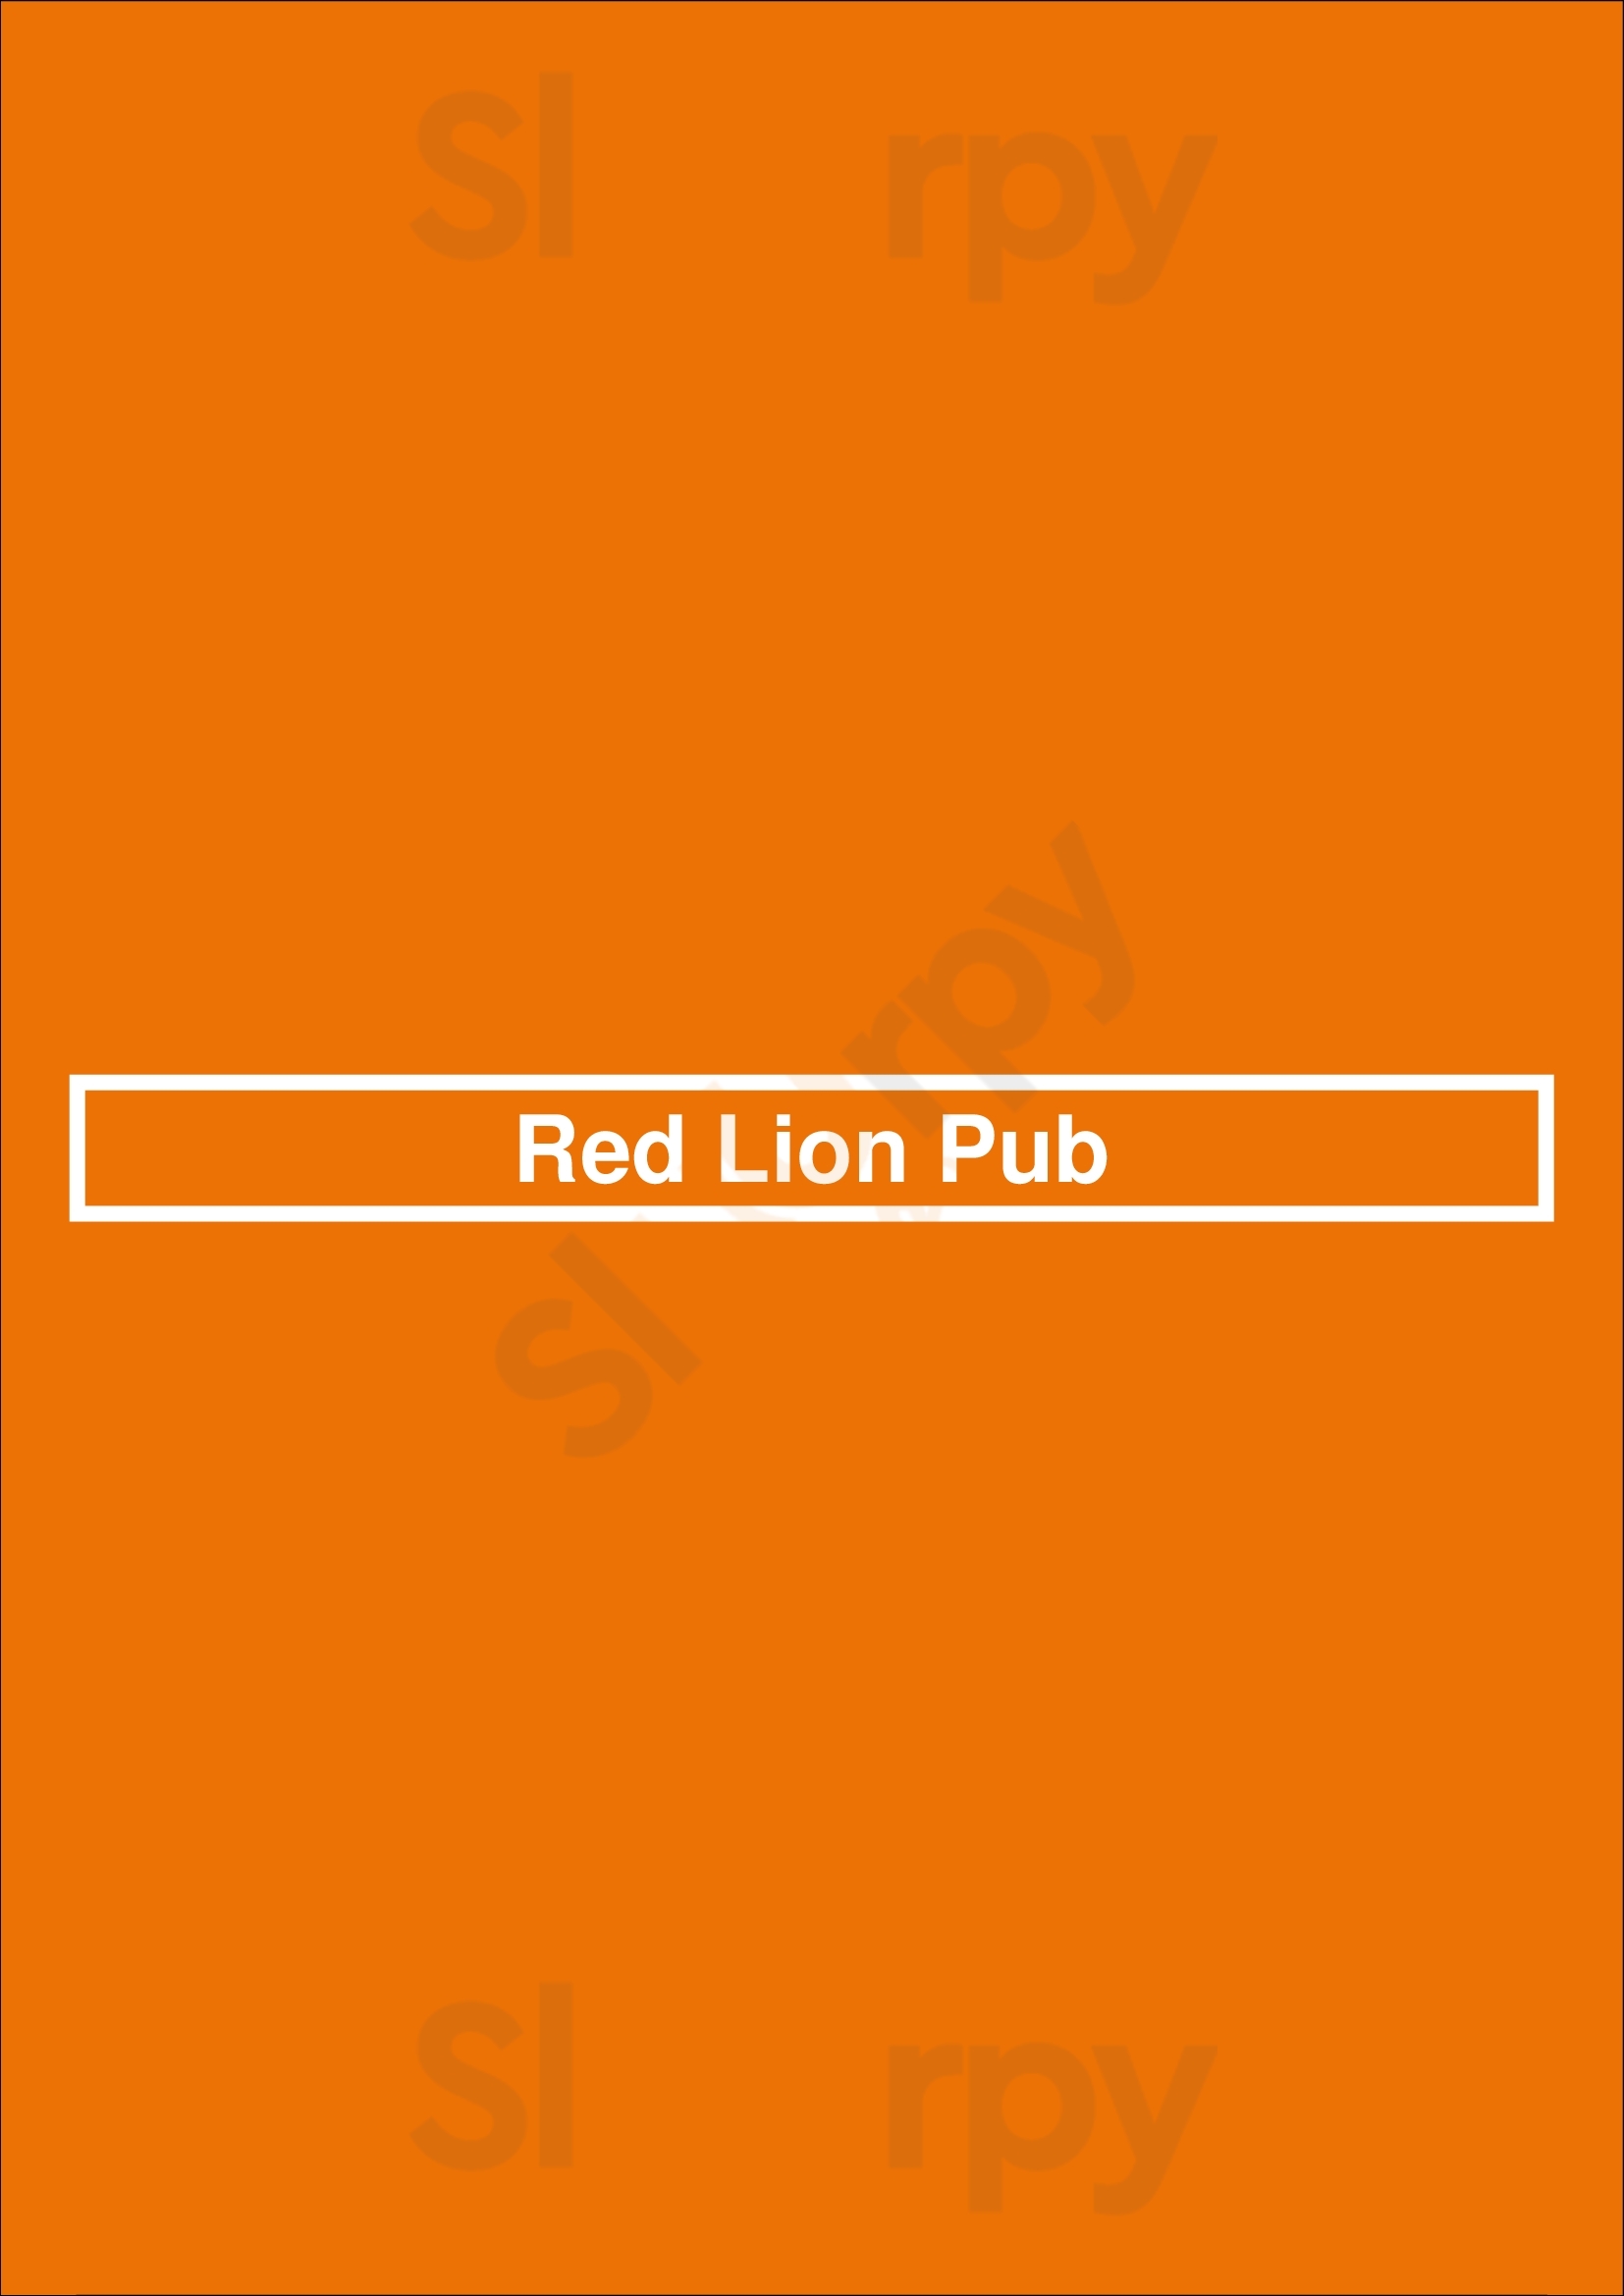 Red Lion Pub Milwaukee Menu - 1